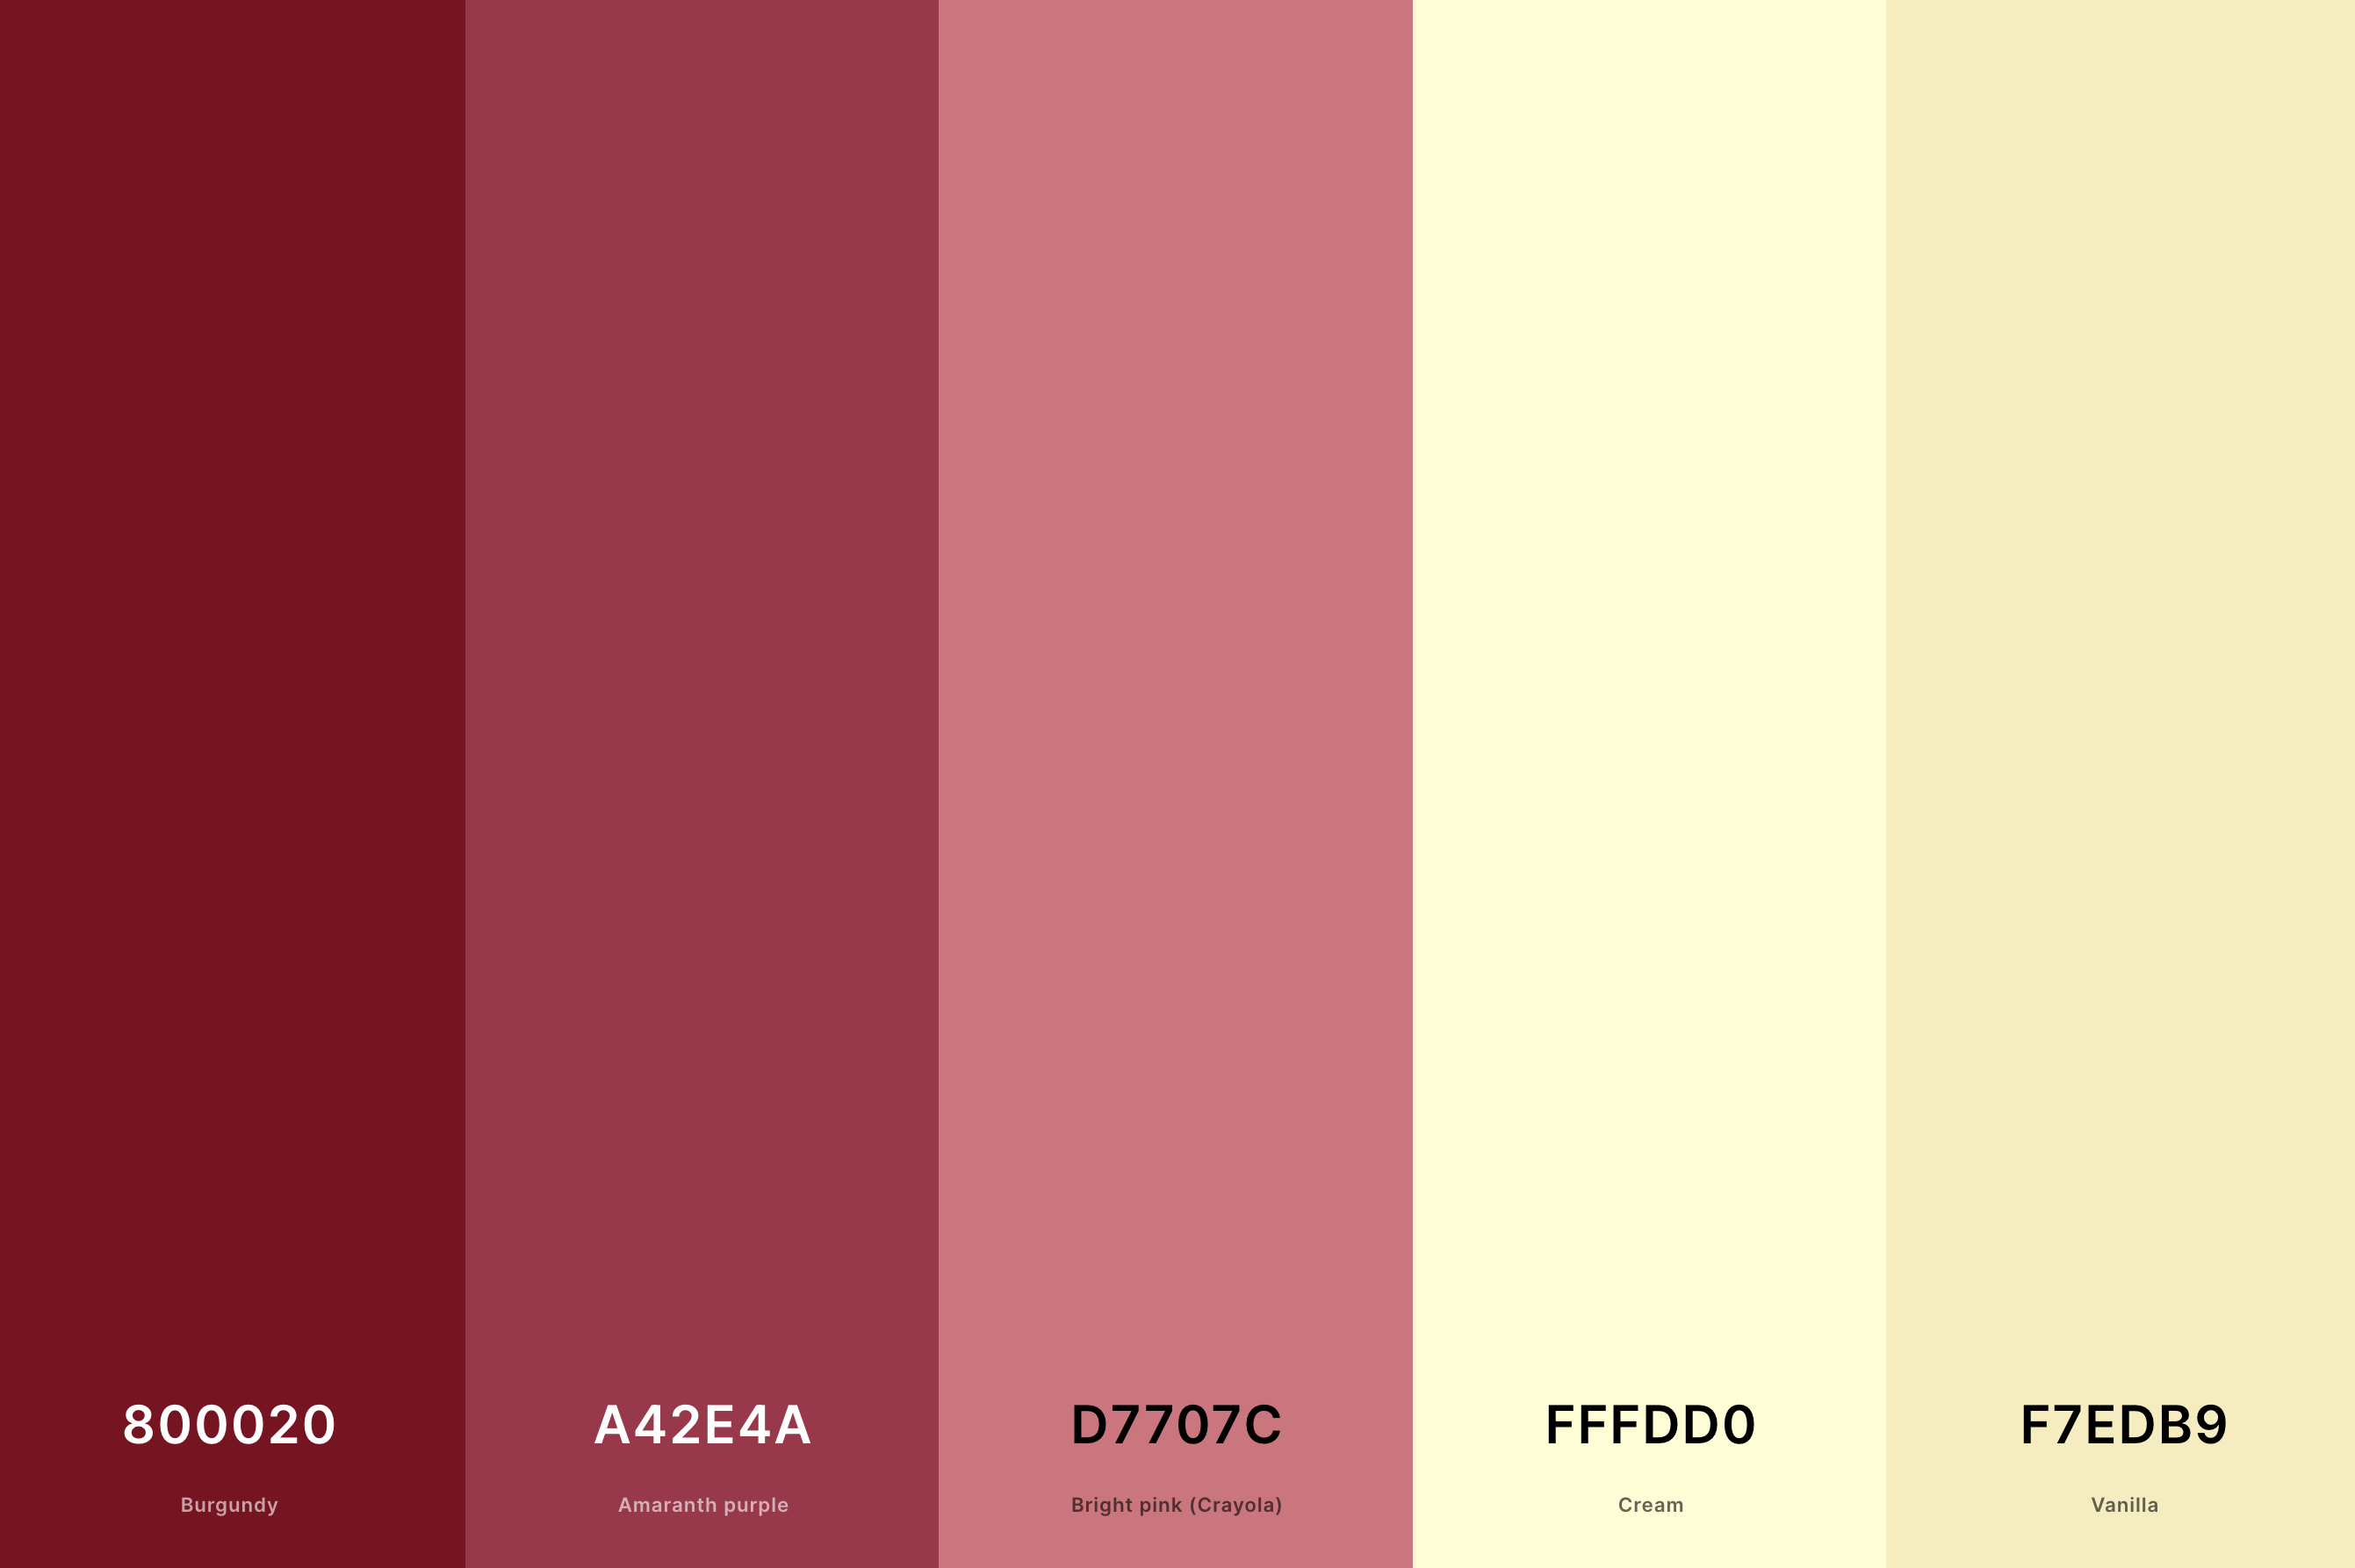 10. Burgundy And Cream Color Palette Color Palette with Burgundy (Hex #800020) + Amaranth Purple (Hex #A42E4A) + Bright Pink (Crayola) (Hex #D7707C) + Cream (Hex #FFFDD0) + Vanilla (Hex #F7EDB9) Color Palette with Hex Codes